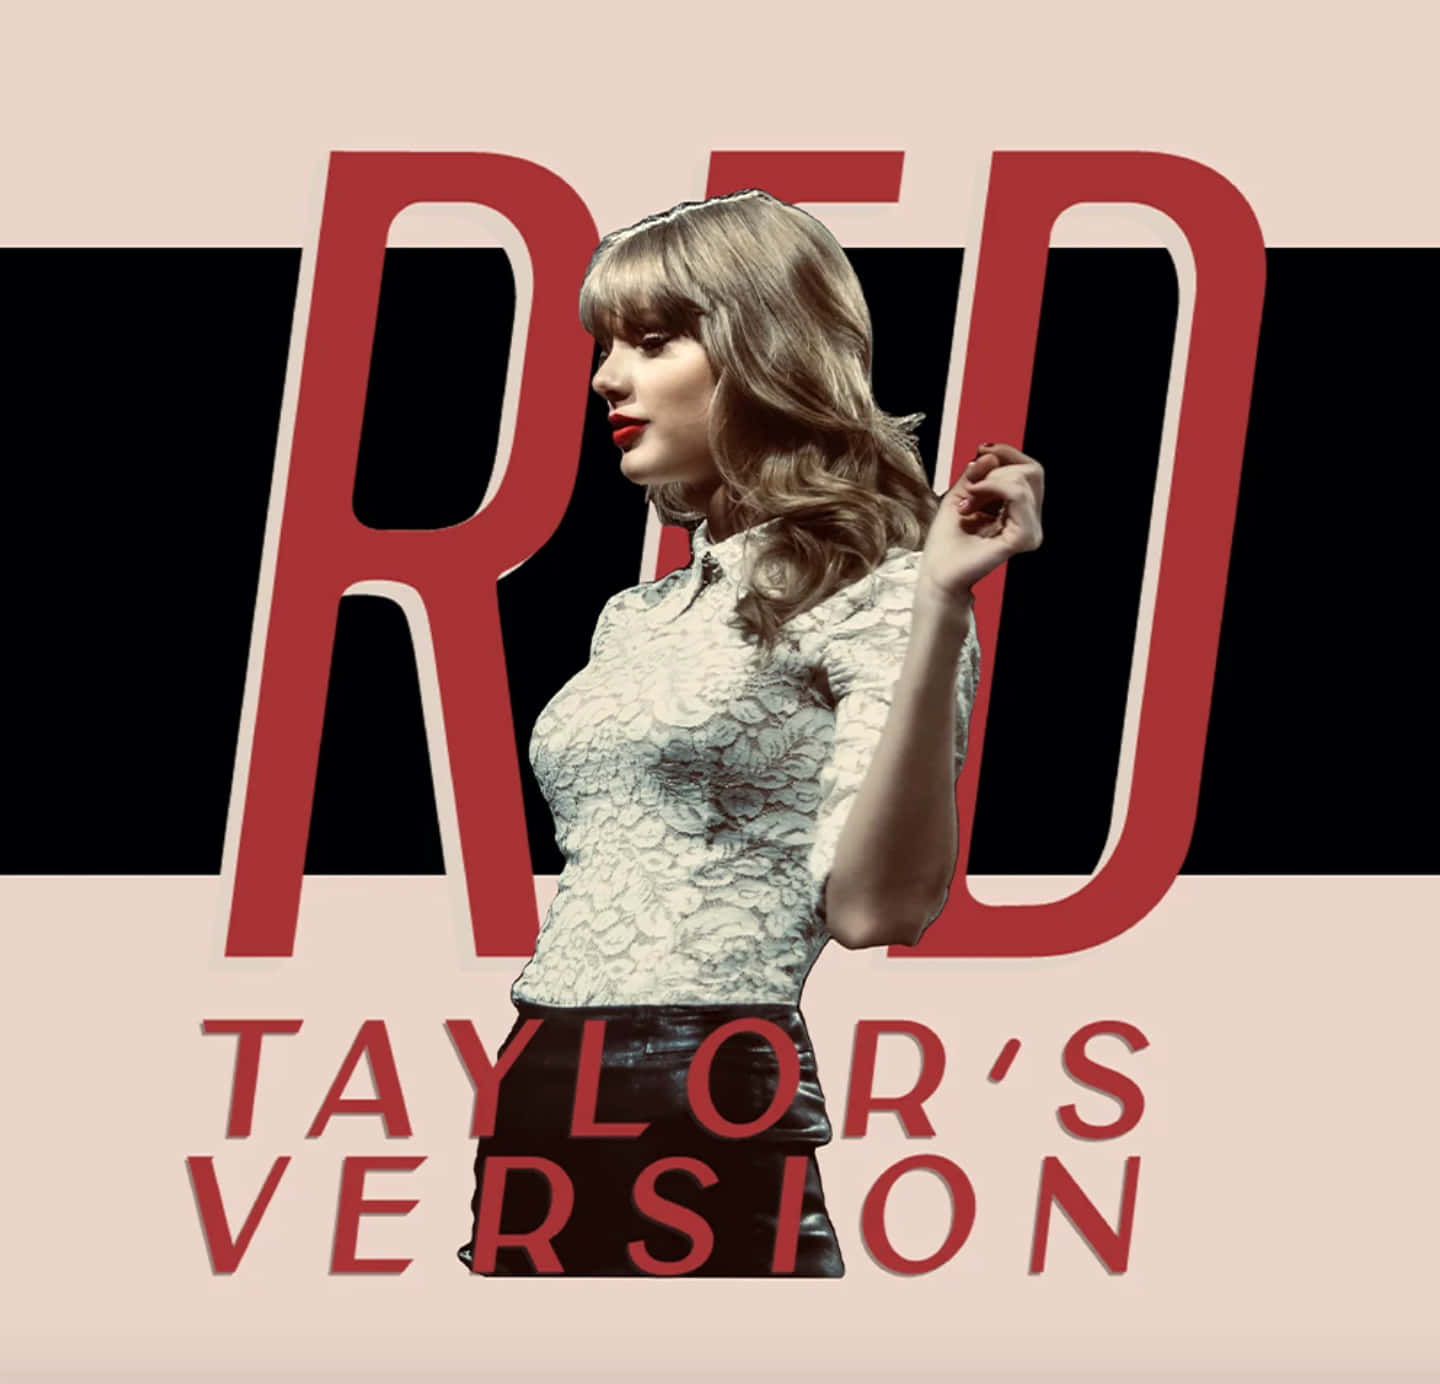 Portadadel Álbum Aesthetic De Red Taylors Version Fondo de pantalla